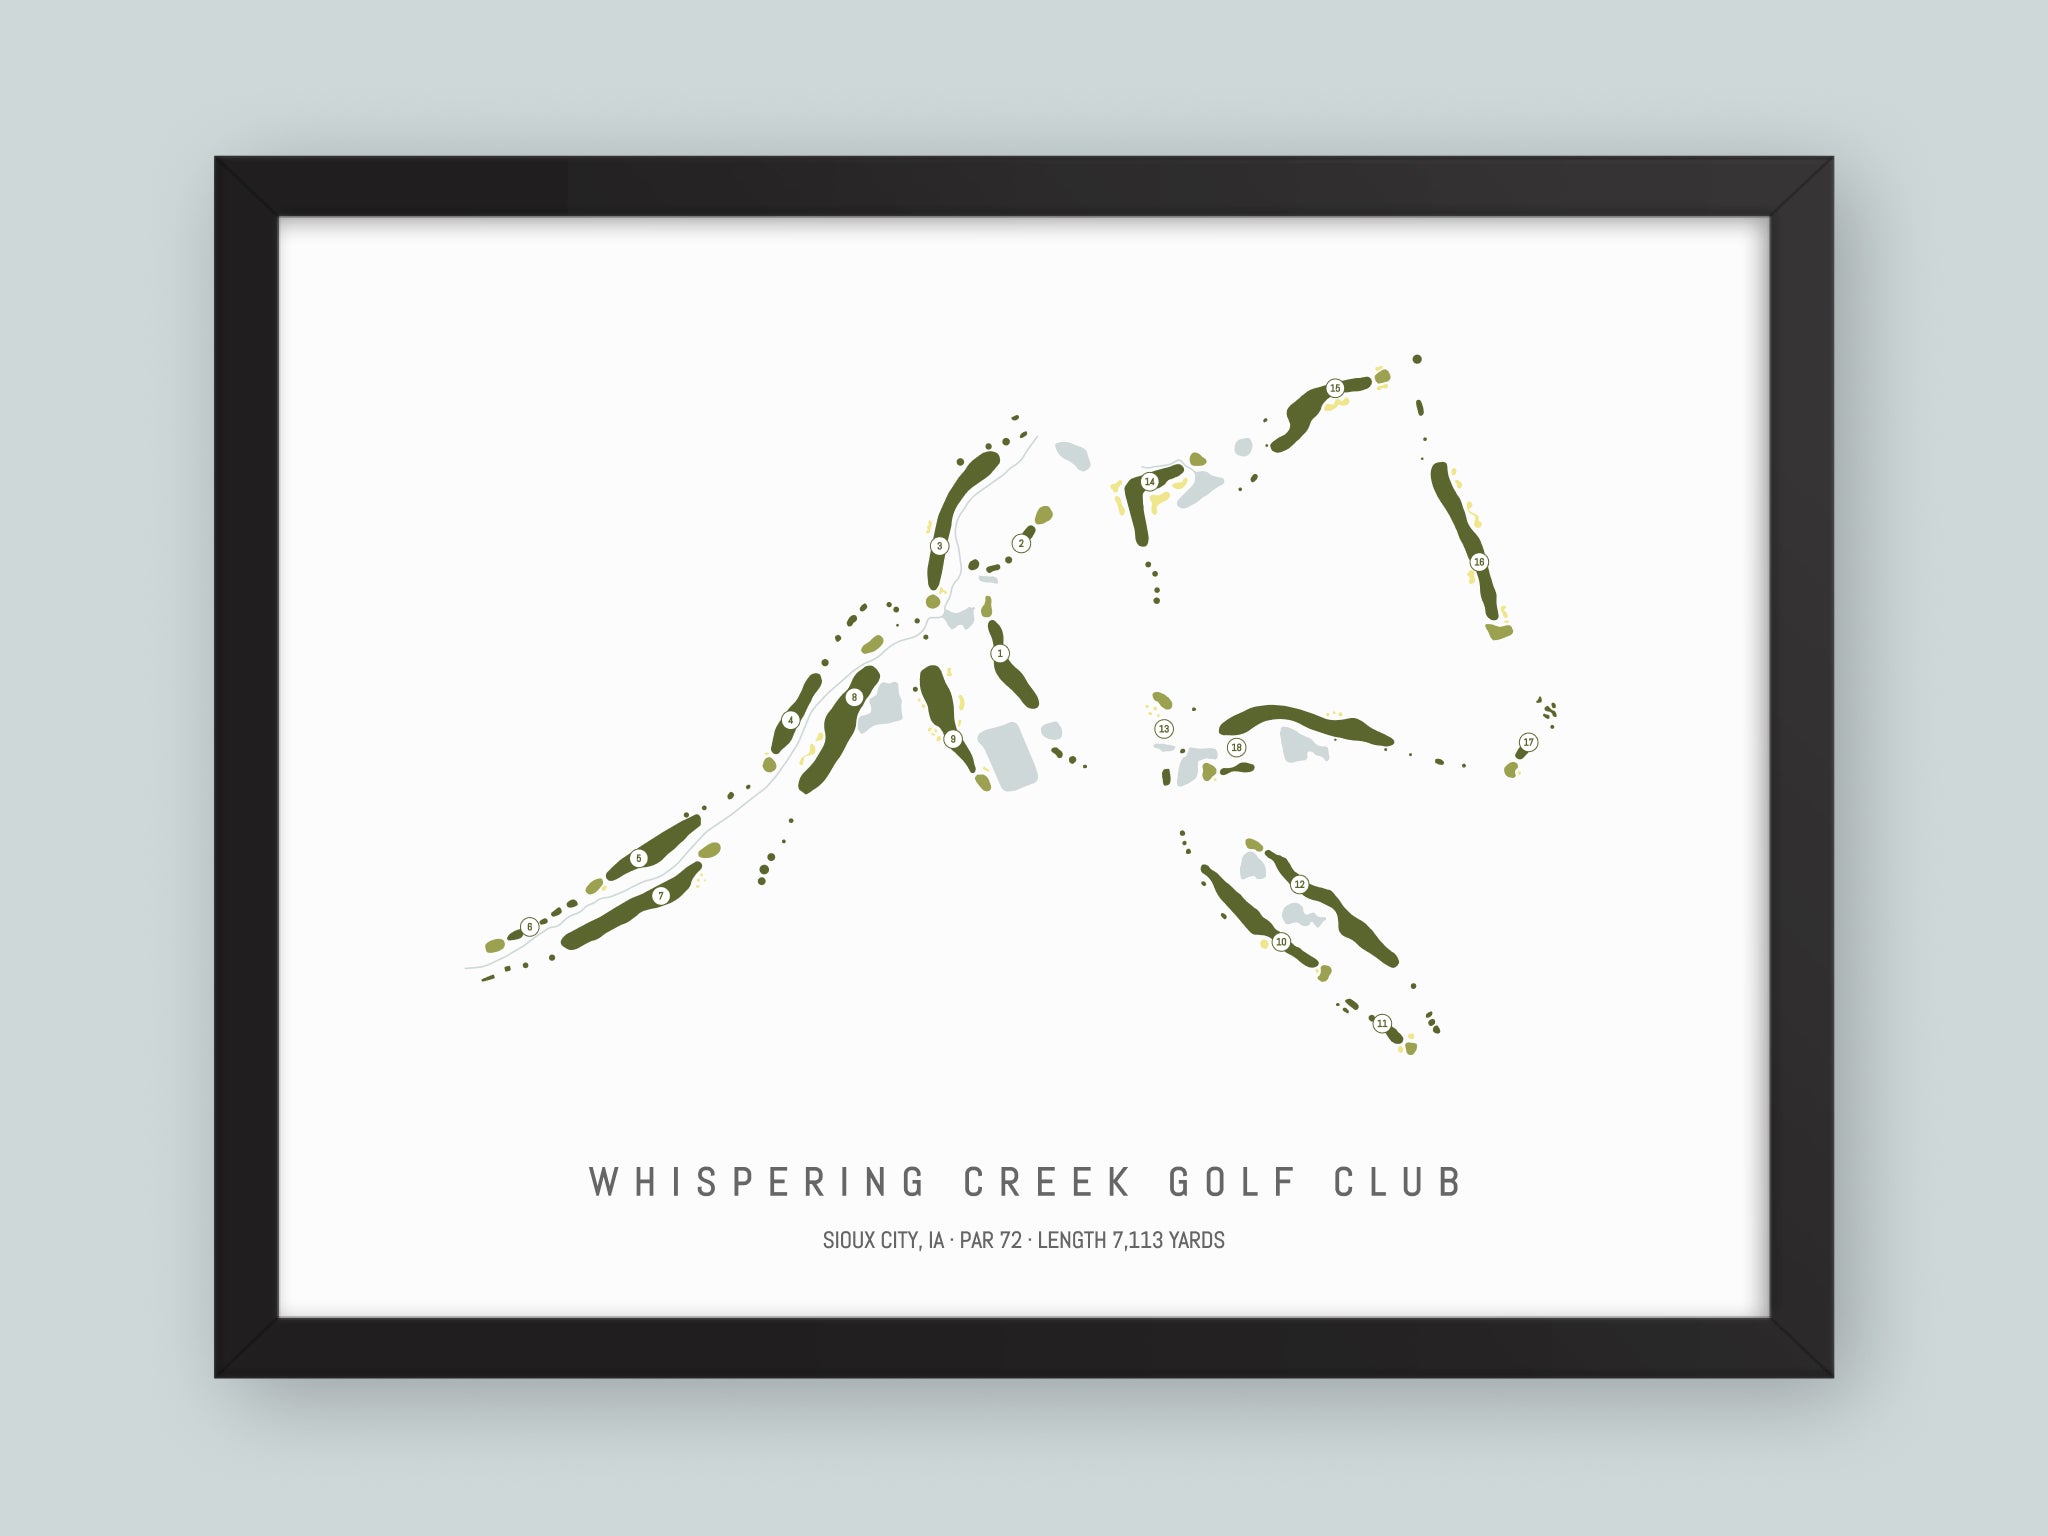 Whispering-Creek-Golf-Club-IA--Black-Frame-24x18-With-Hole-Numbers